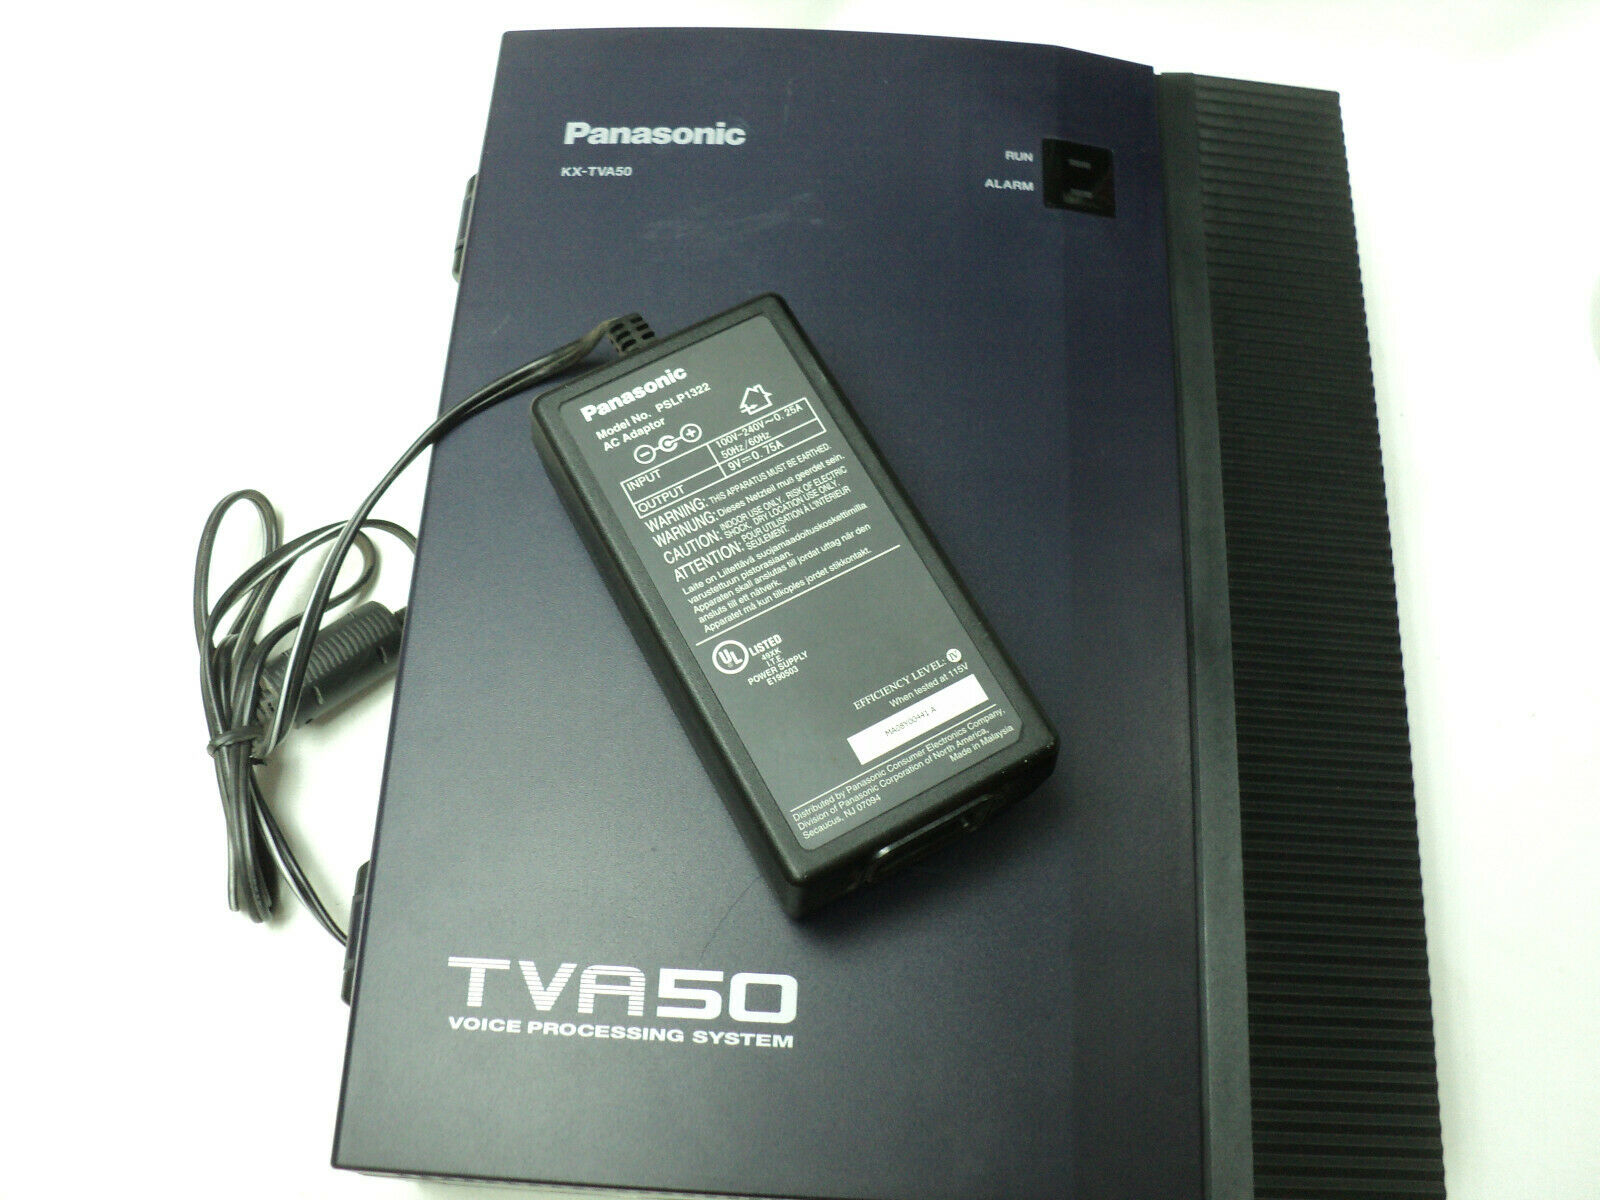 Panasonic Kx-tva50 Voice Mail Processing System & Power Unit 4 Ports With Tva502